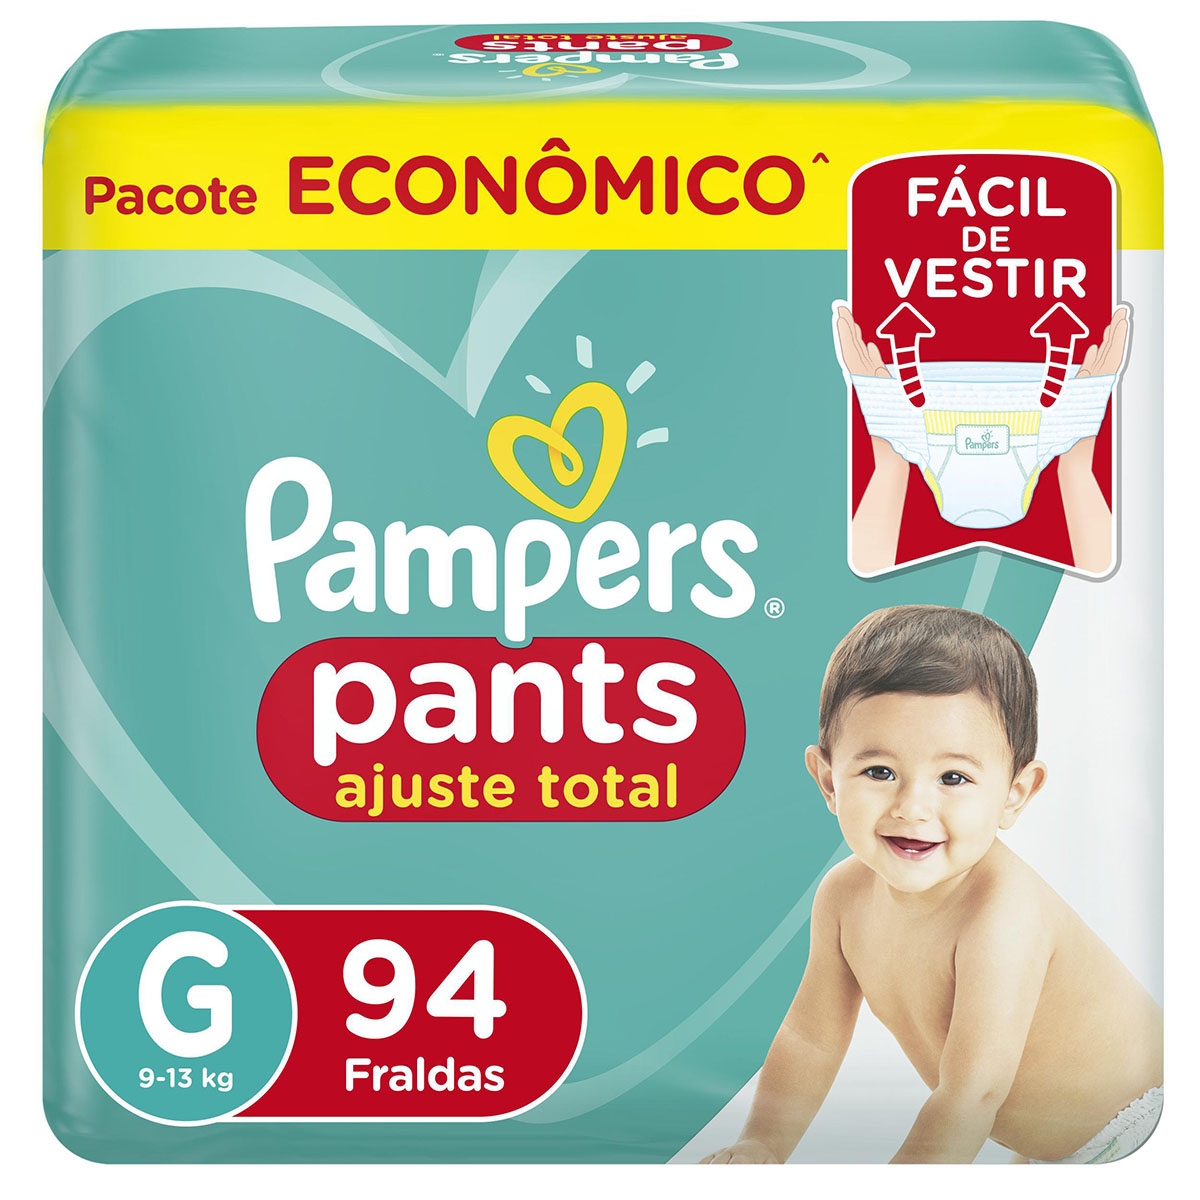 Fralda Personal Baby Premium Pants M 70 unidades - Oferta